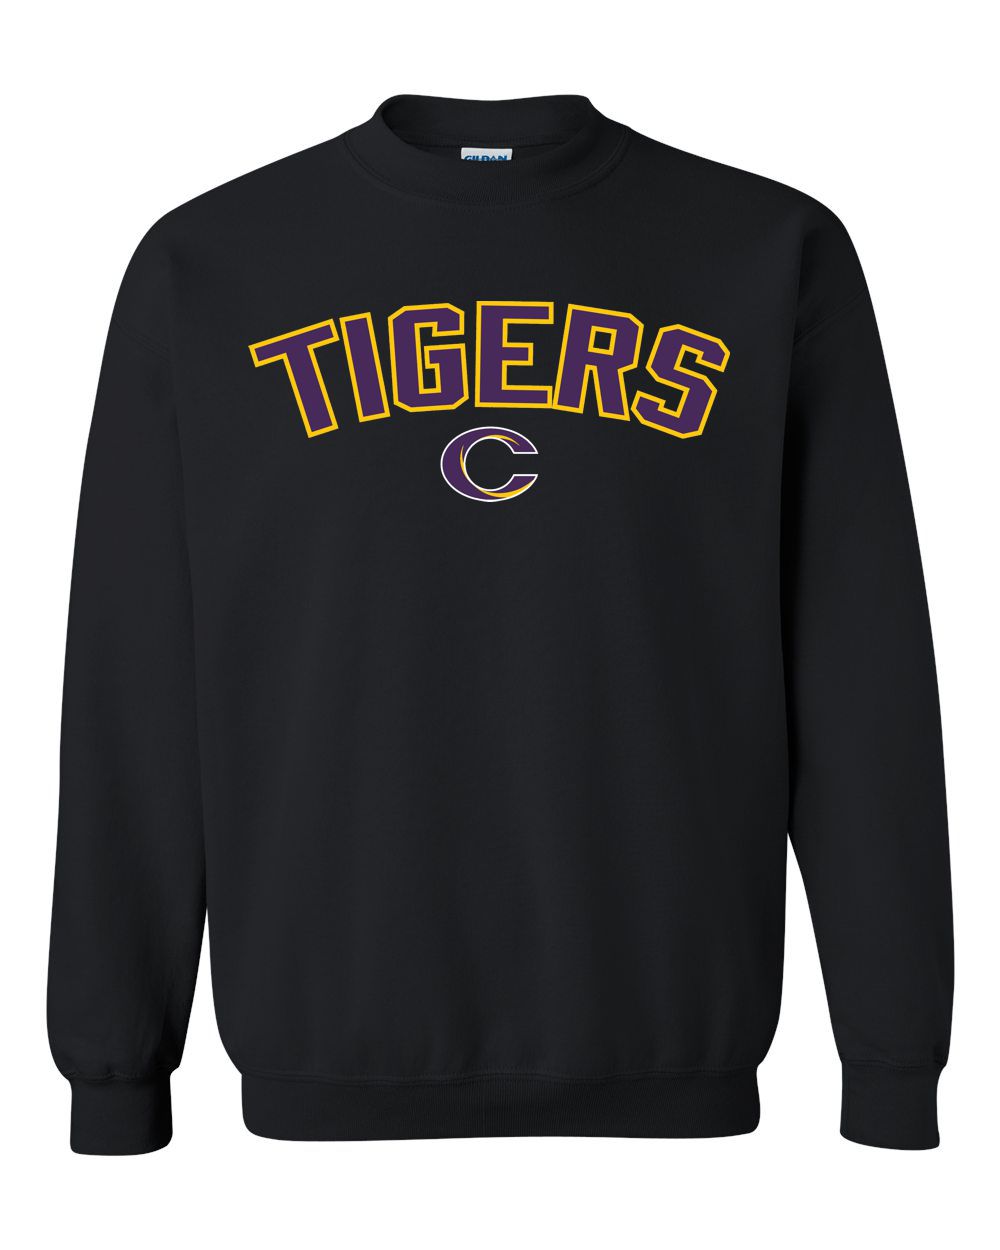 Caro Tigers Arc Basic Crew Sweatshirt - Schall